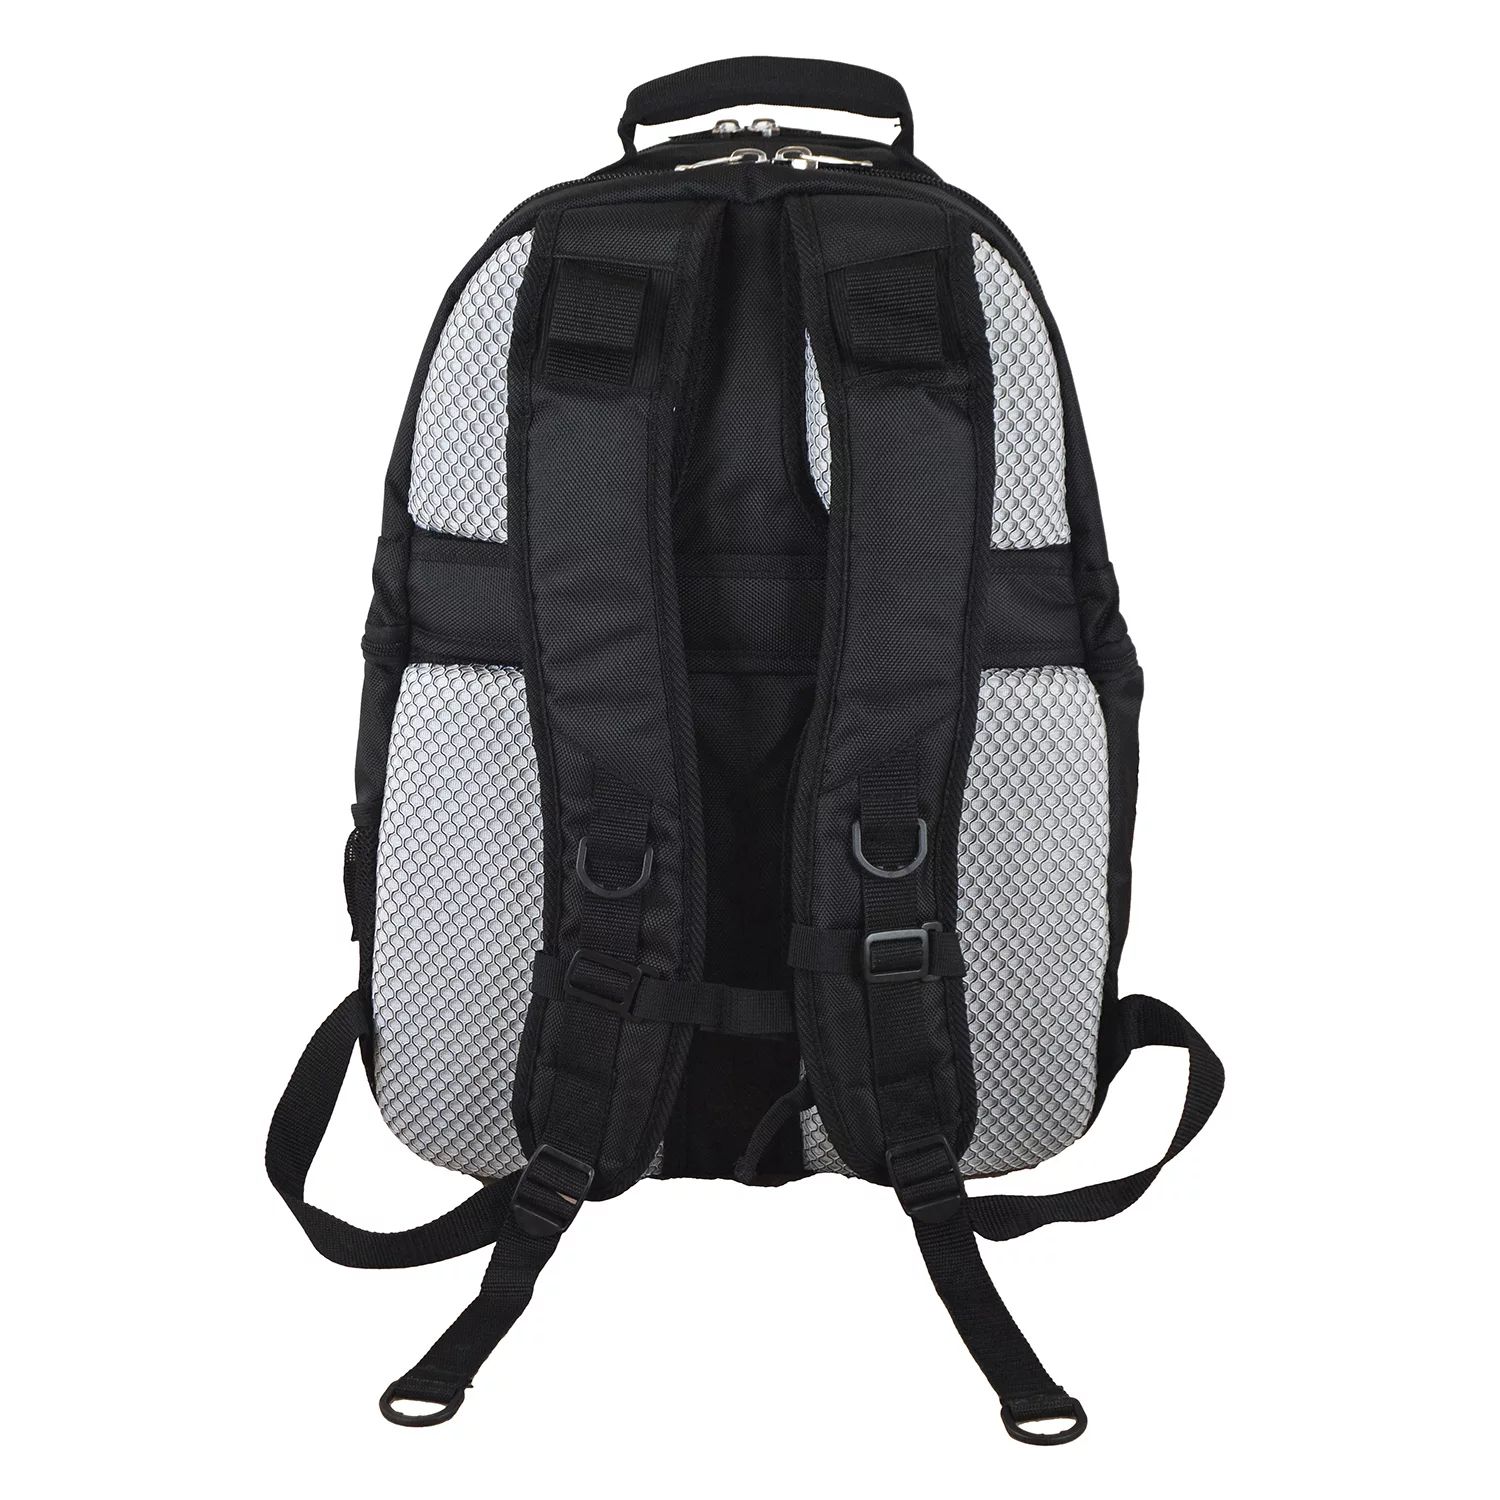 Рюкзак для ноутбука Los Angeles Kings Premium, черный рюкзак los angeles kings premium на колесиках черный